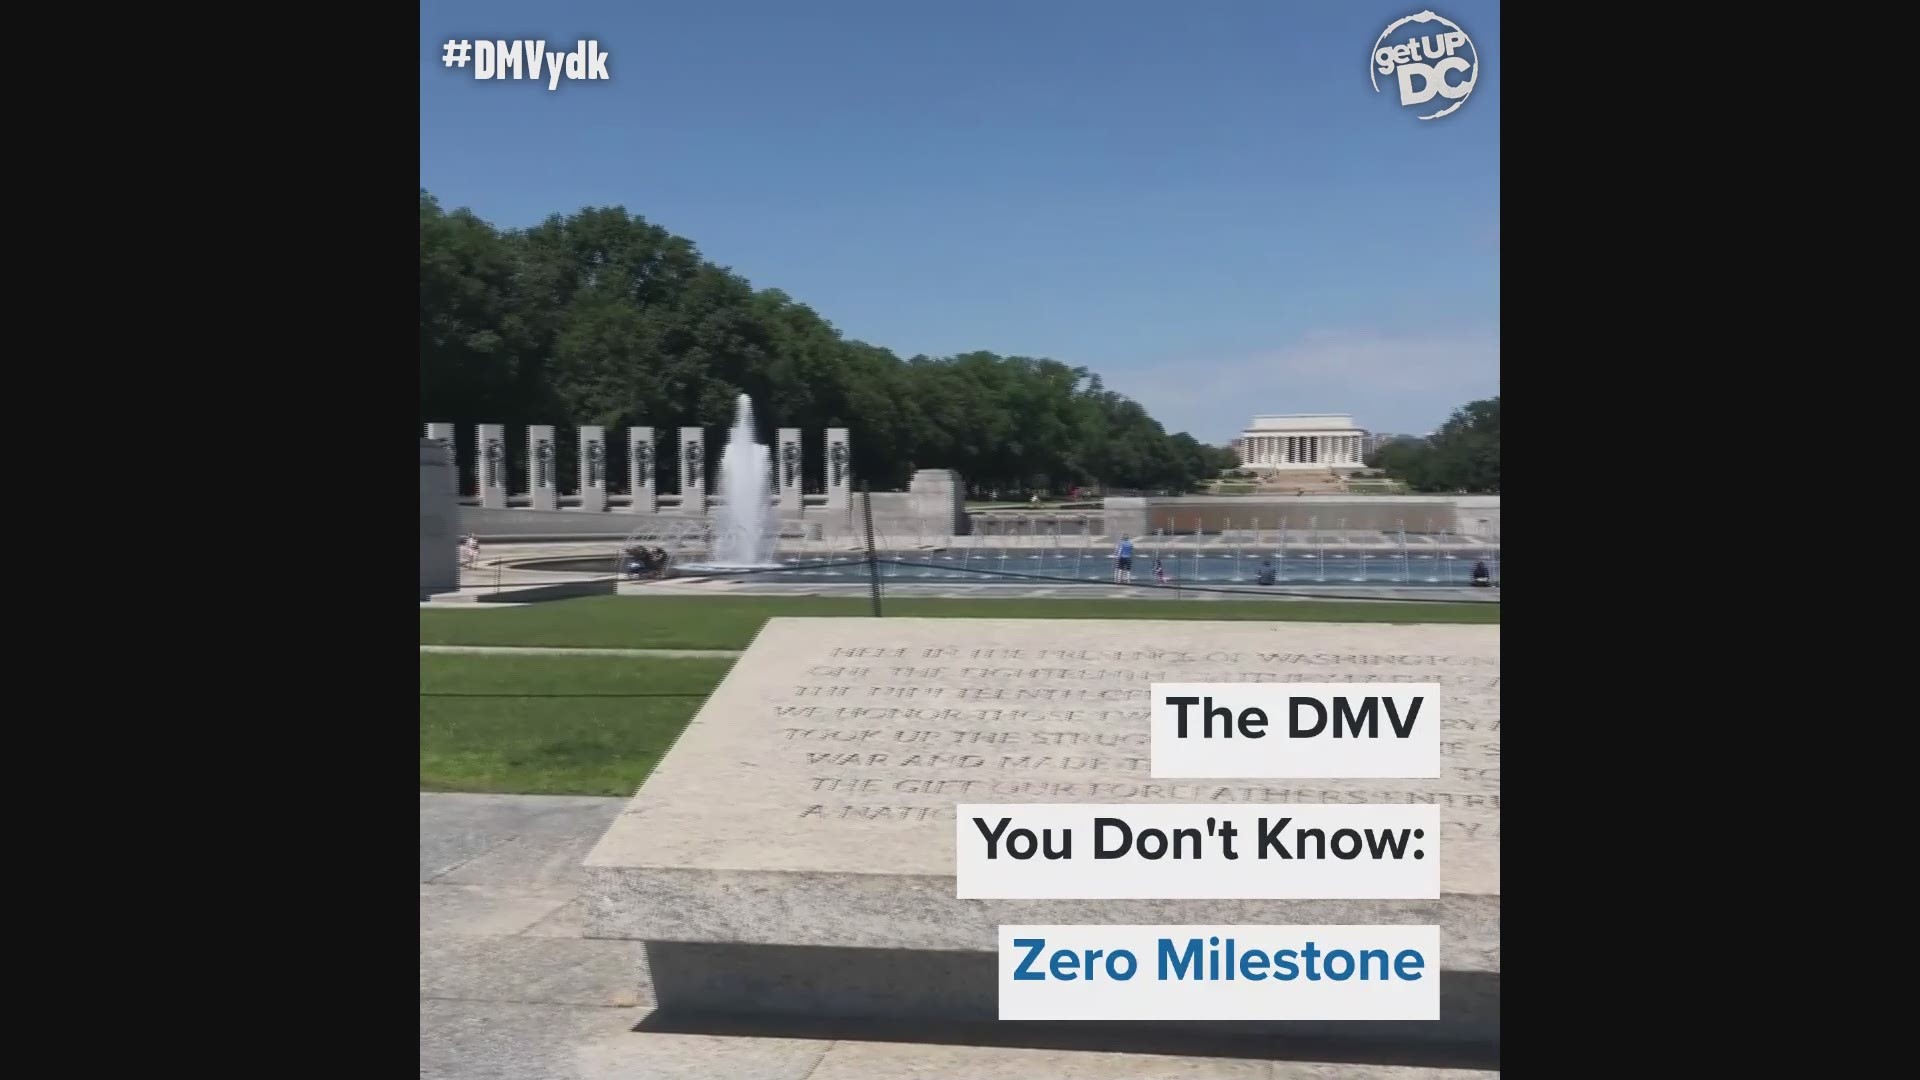 Have you visited the Zero Milestone?